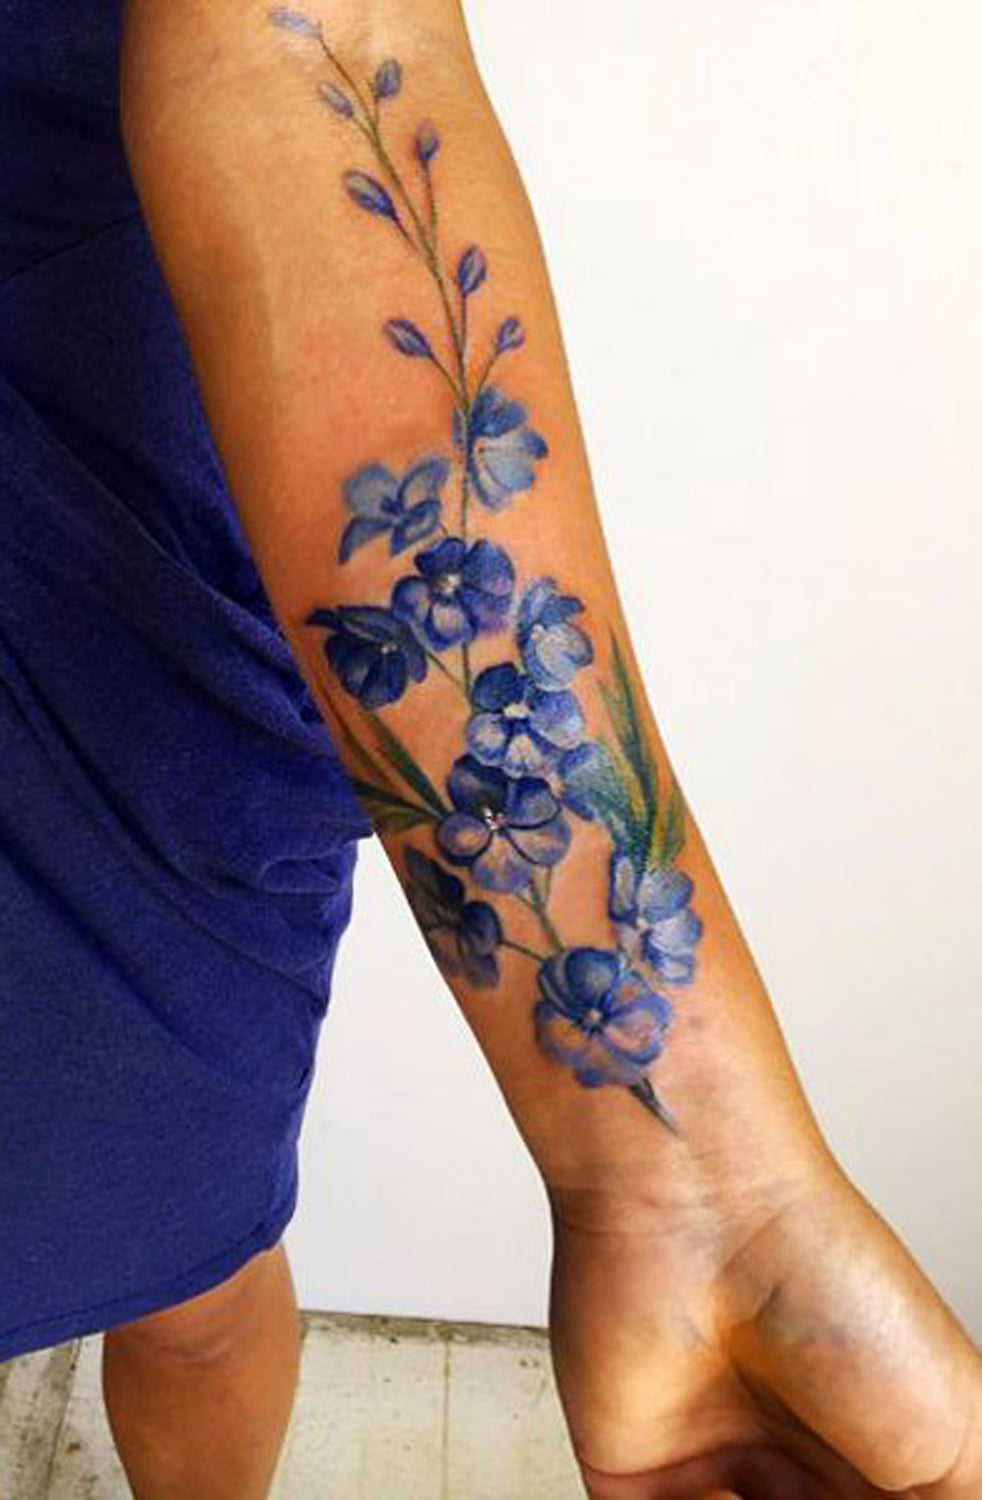 Tattoo uploaded by Bindy • #flowers #floral #blue #scroll  #behindtheeartattoo #welove • Tattoodo